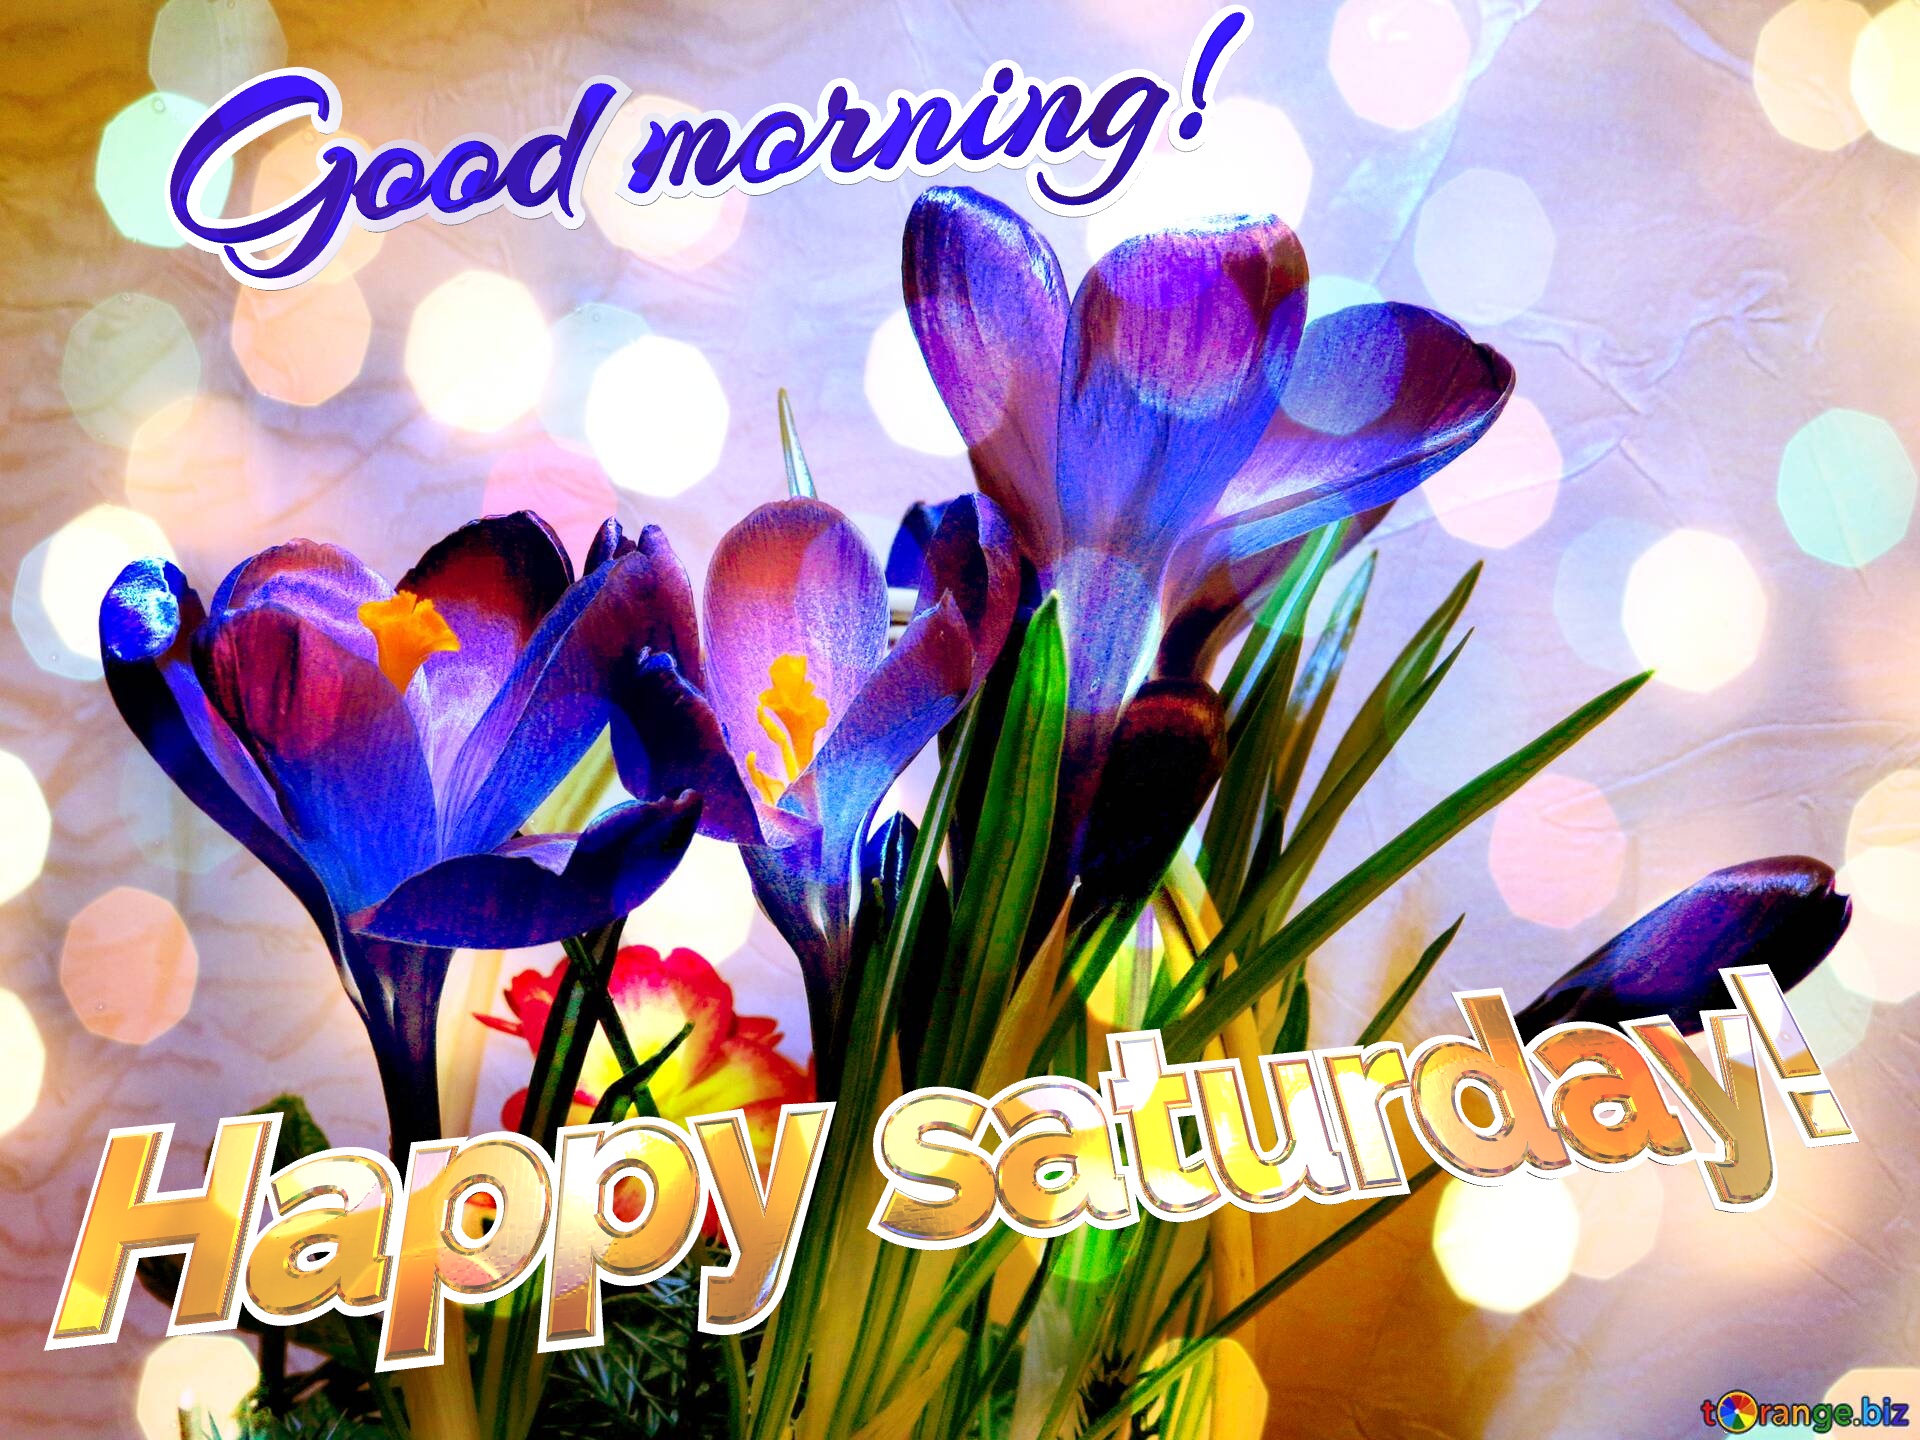 Good morning!  Happy saturday!  Blue Scilla Spring Floral bokeh background №0